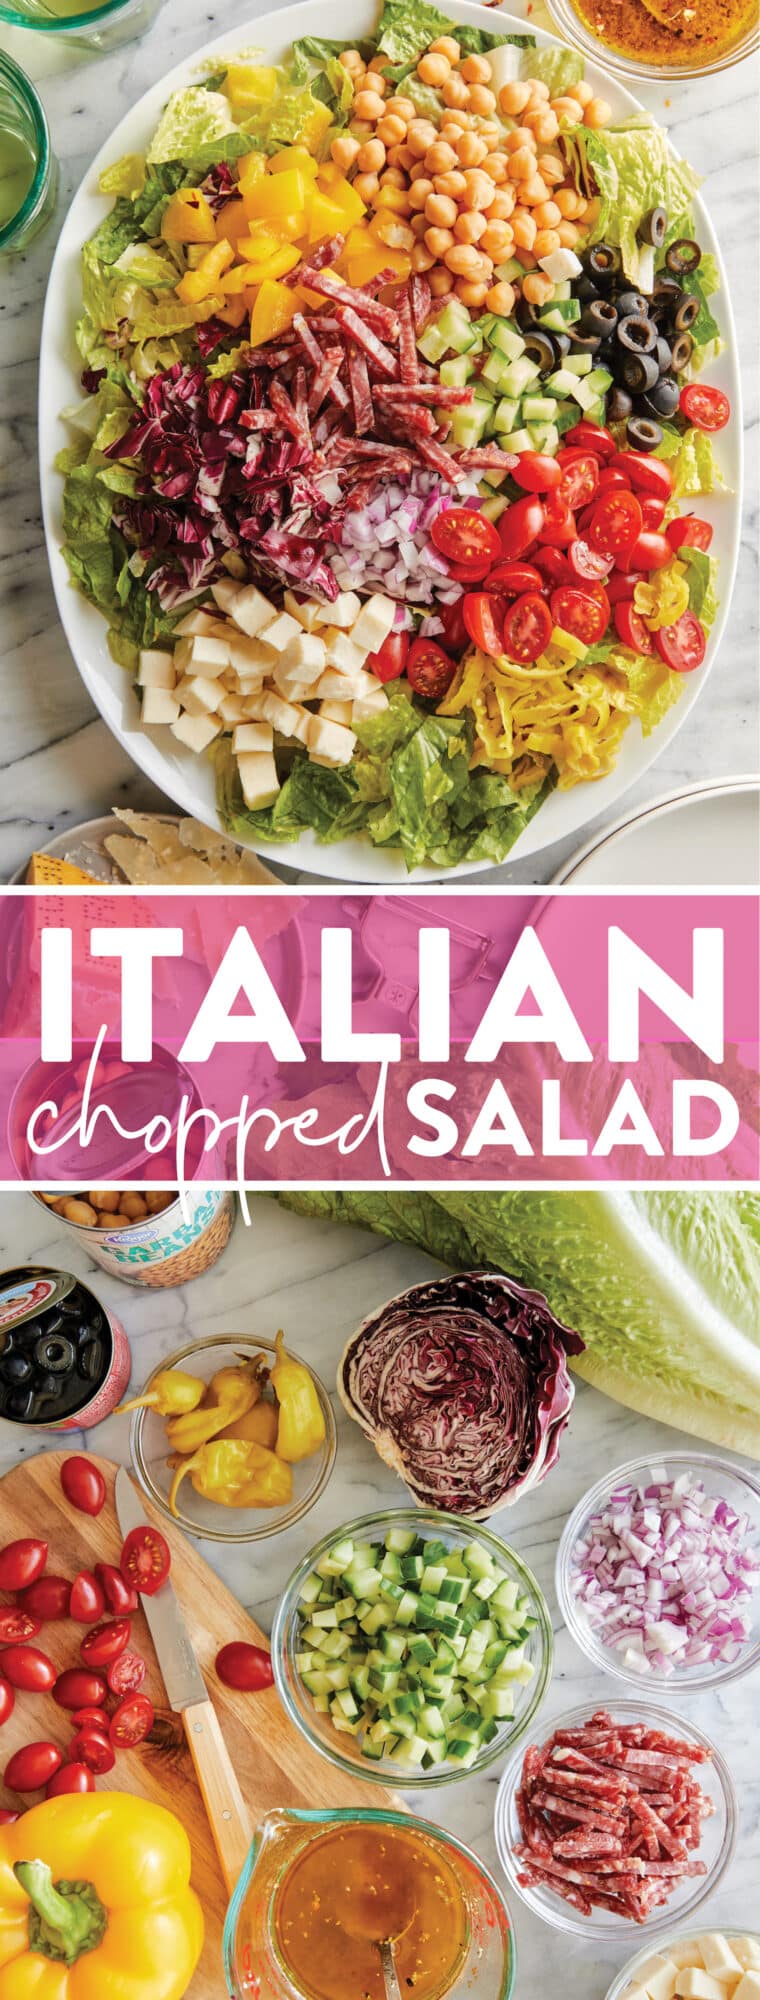 Italian Chopped Salad - Crisp lettuce, cubed mozzarella, and diced salami in a red wine vinaigrette. So colorful, so vibrant, and so so good!